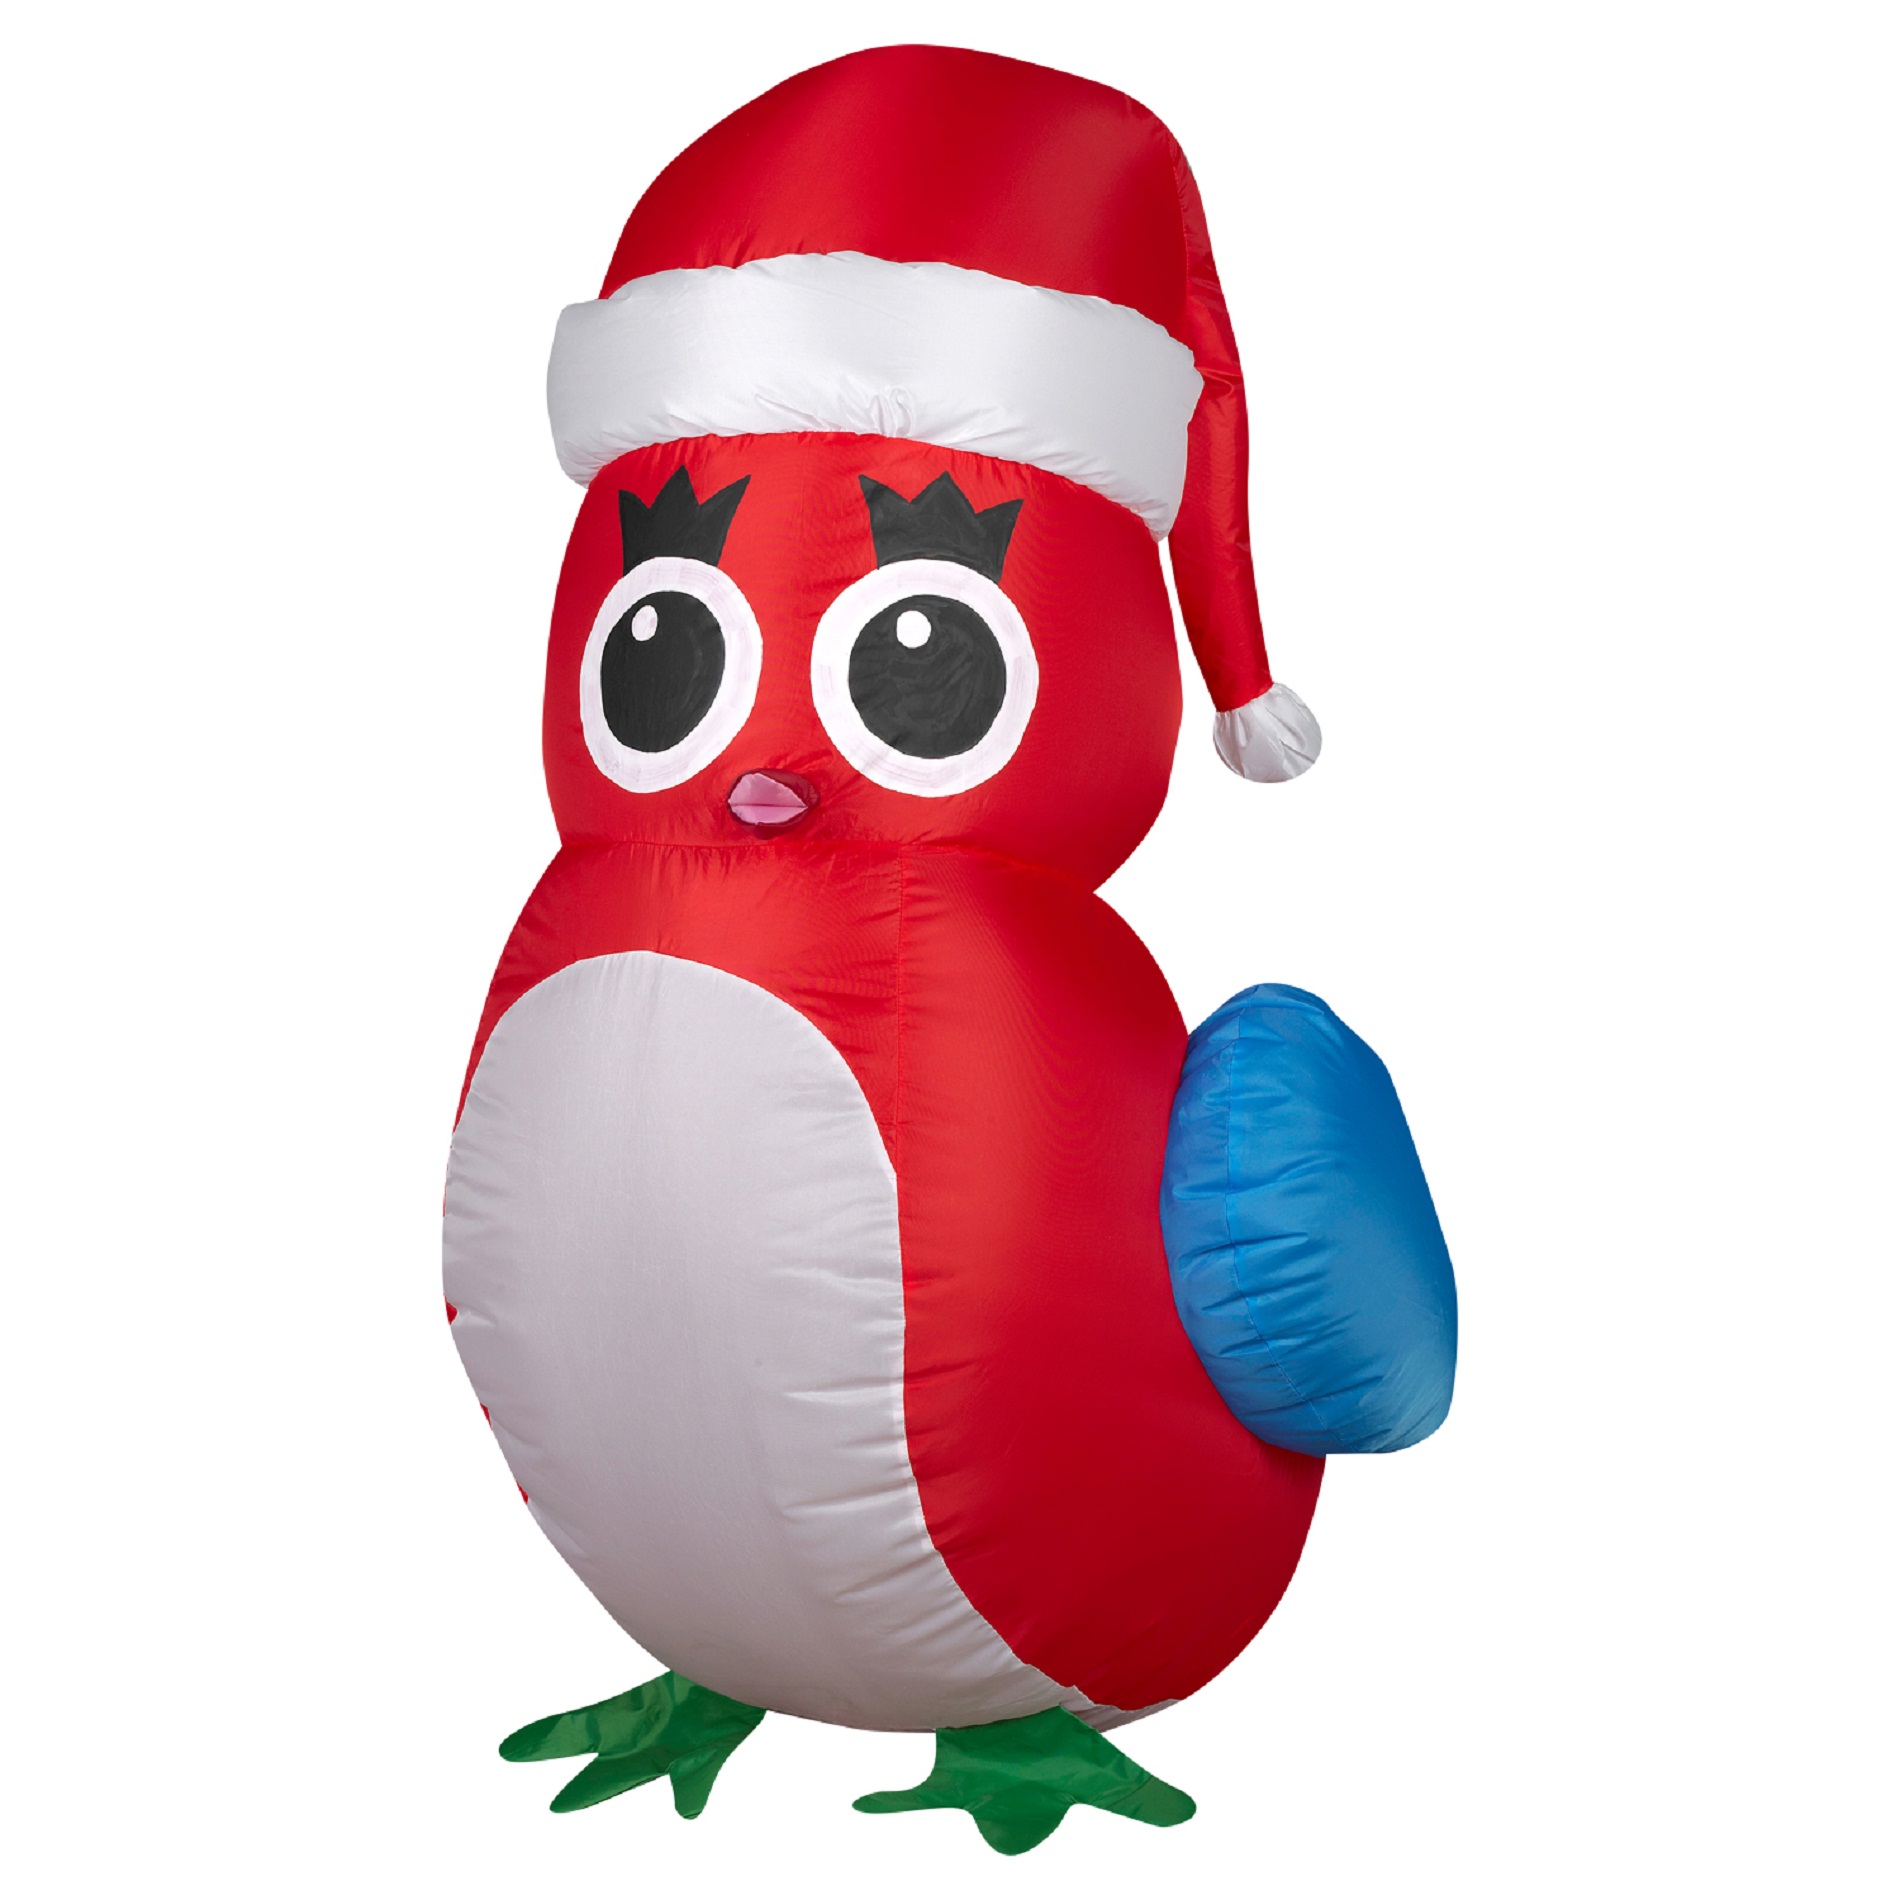 Lighted Inflatable Bird Christmas Decoration